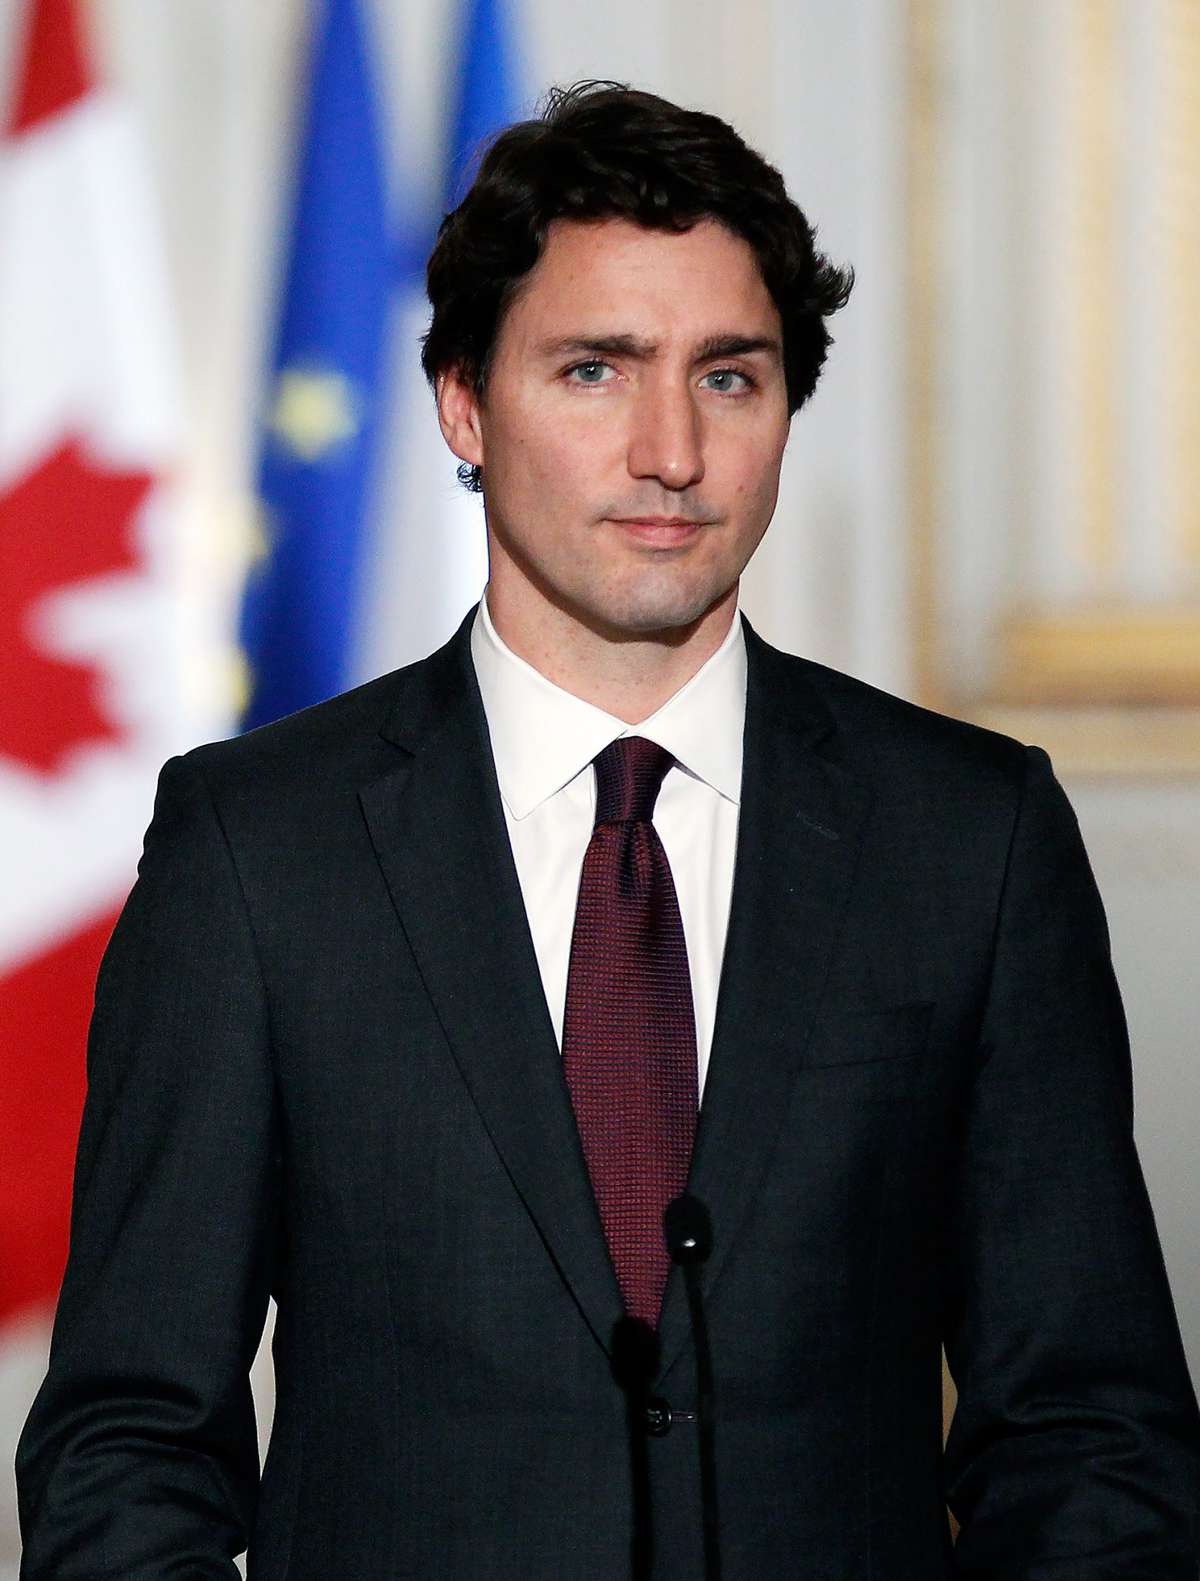 Justin Trudeau - LEAD